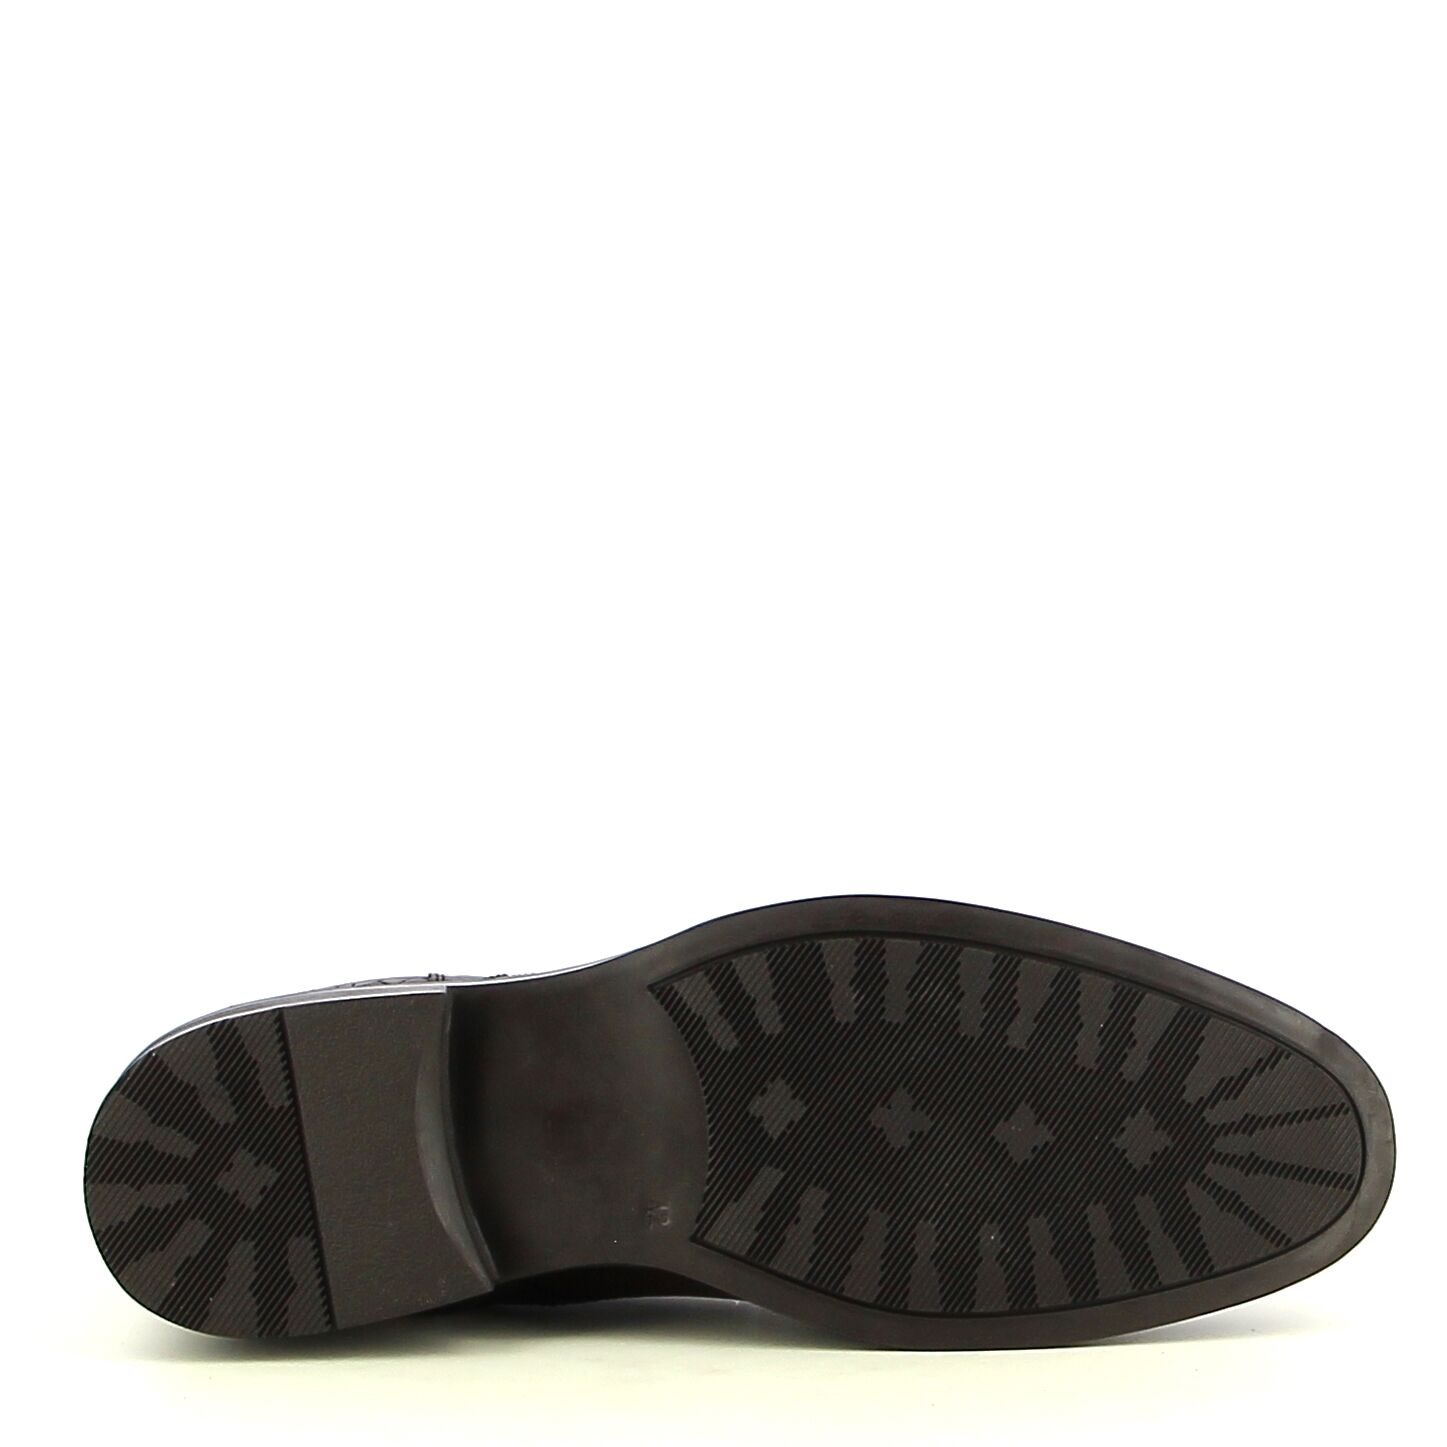 Ken Shoe Fashion - Bruin - Veterschoenen